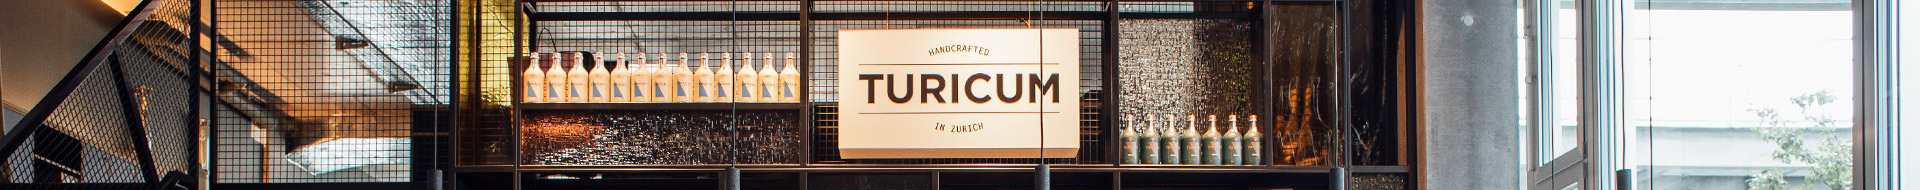 Turicum Distillery GmbH